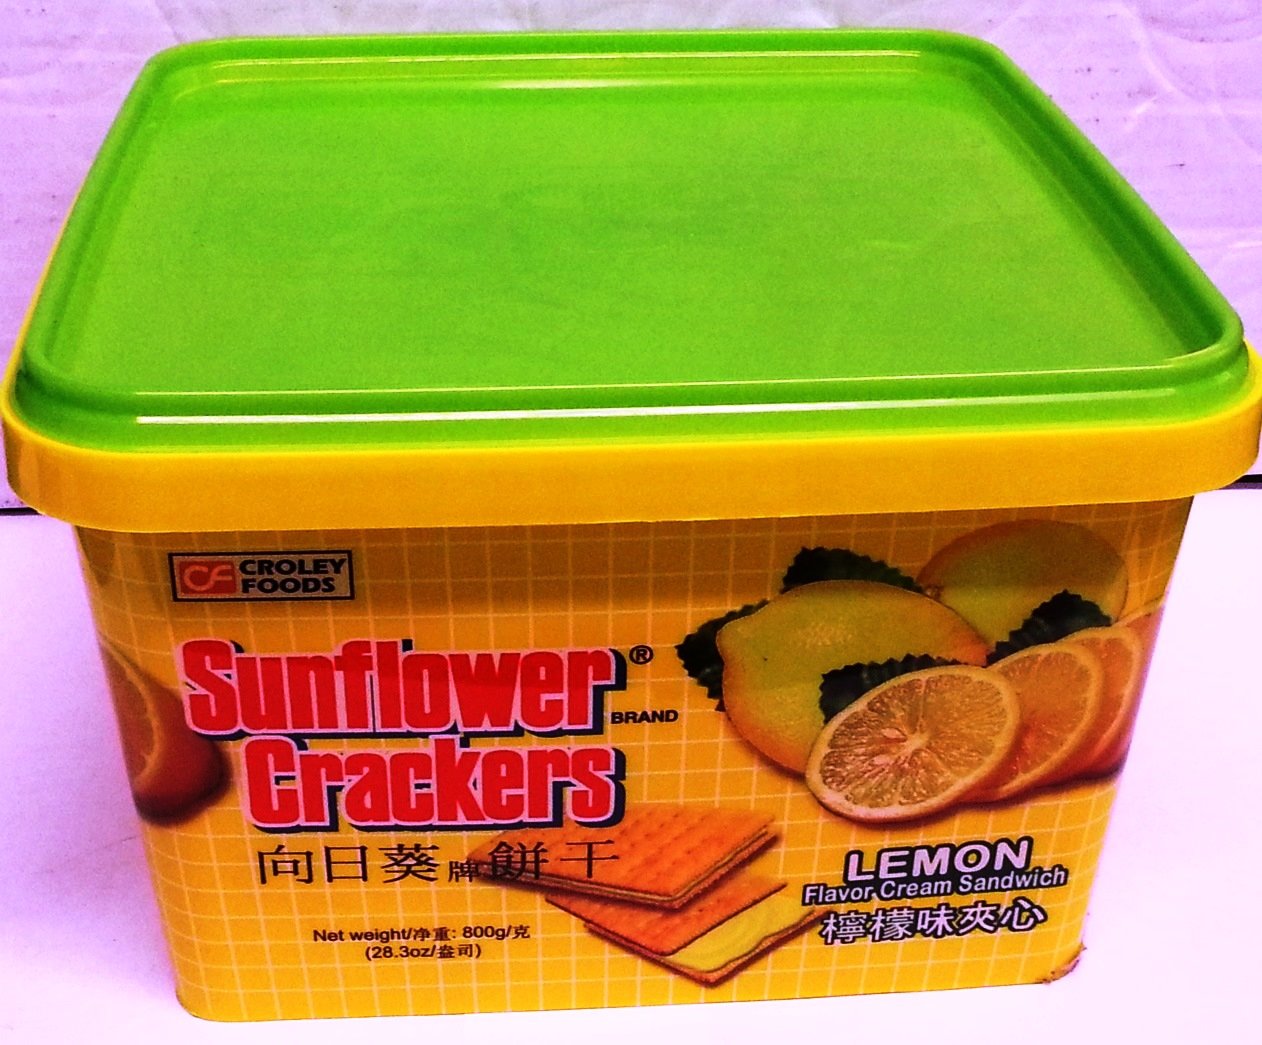 Sunflower Crackers Lemon Flavor 28.3oz